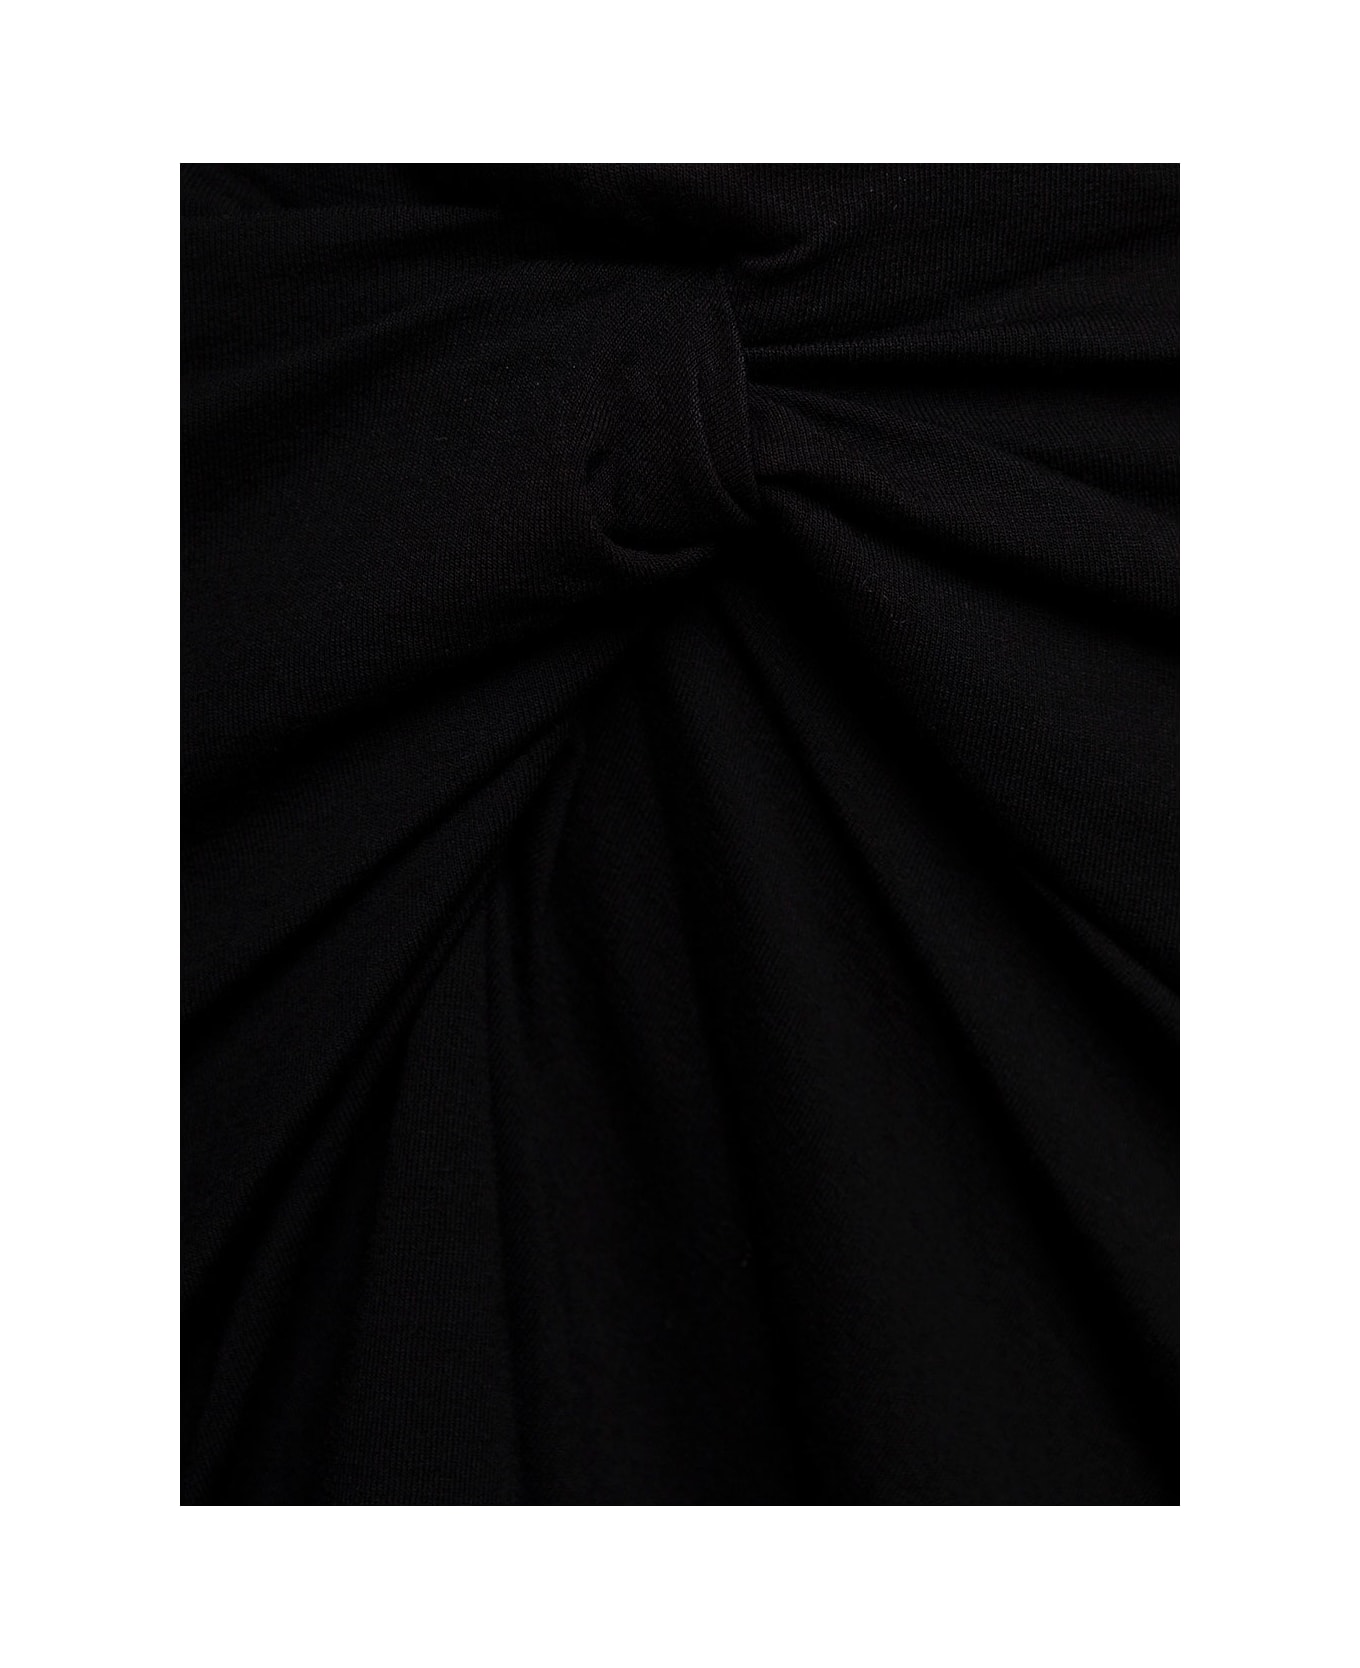 Marant Étoile Natacha Skirt - Black